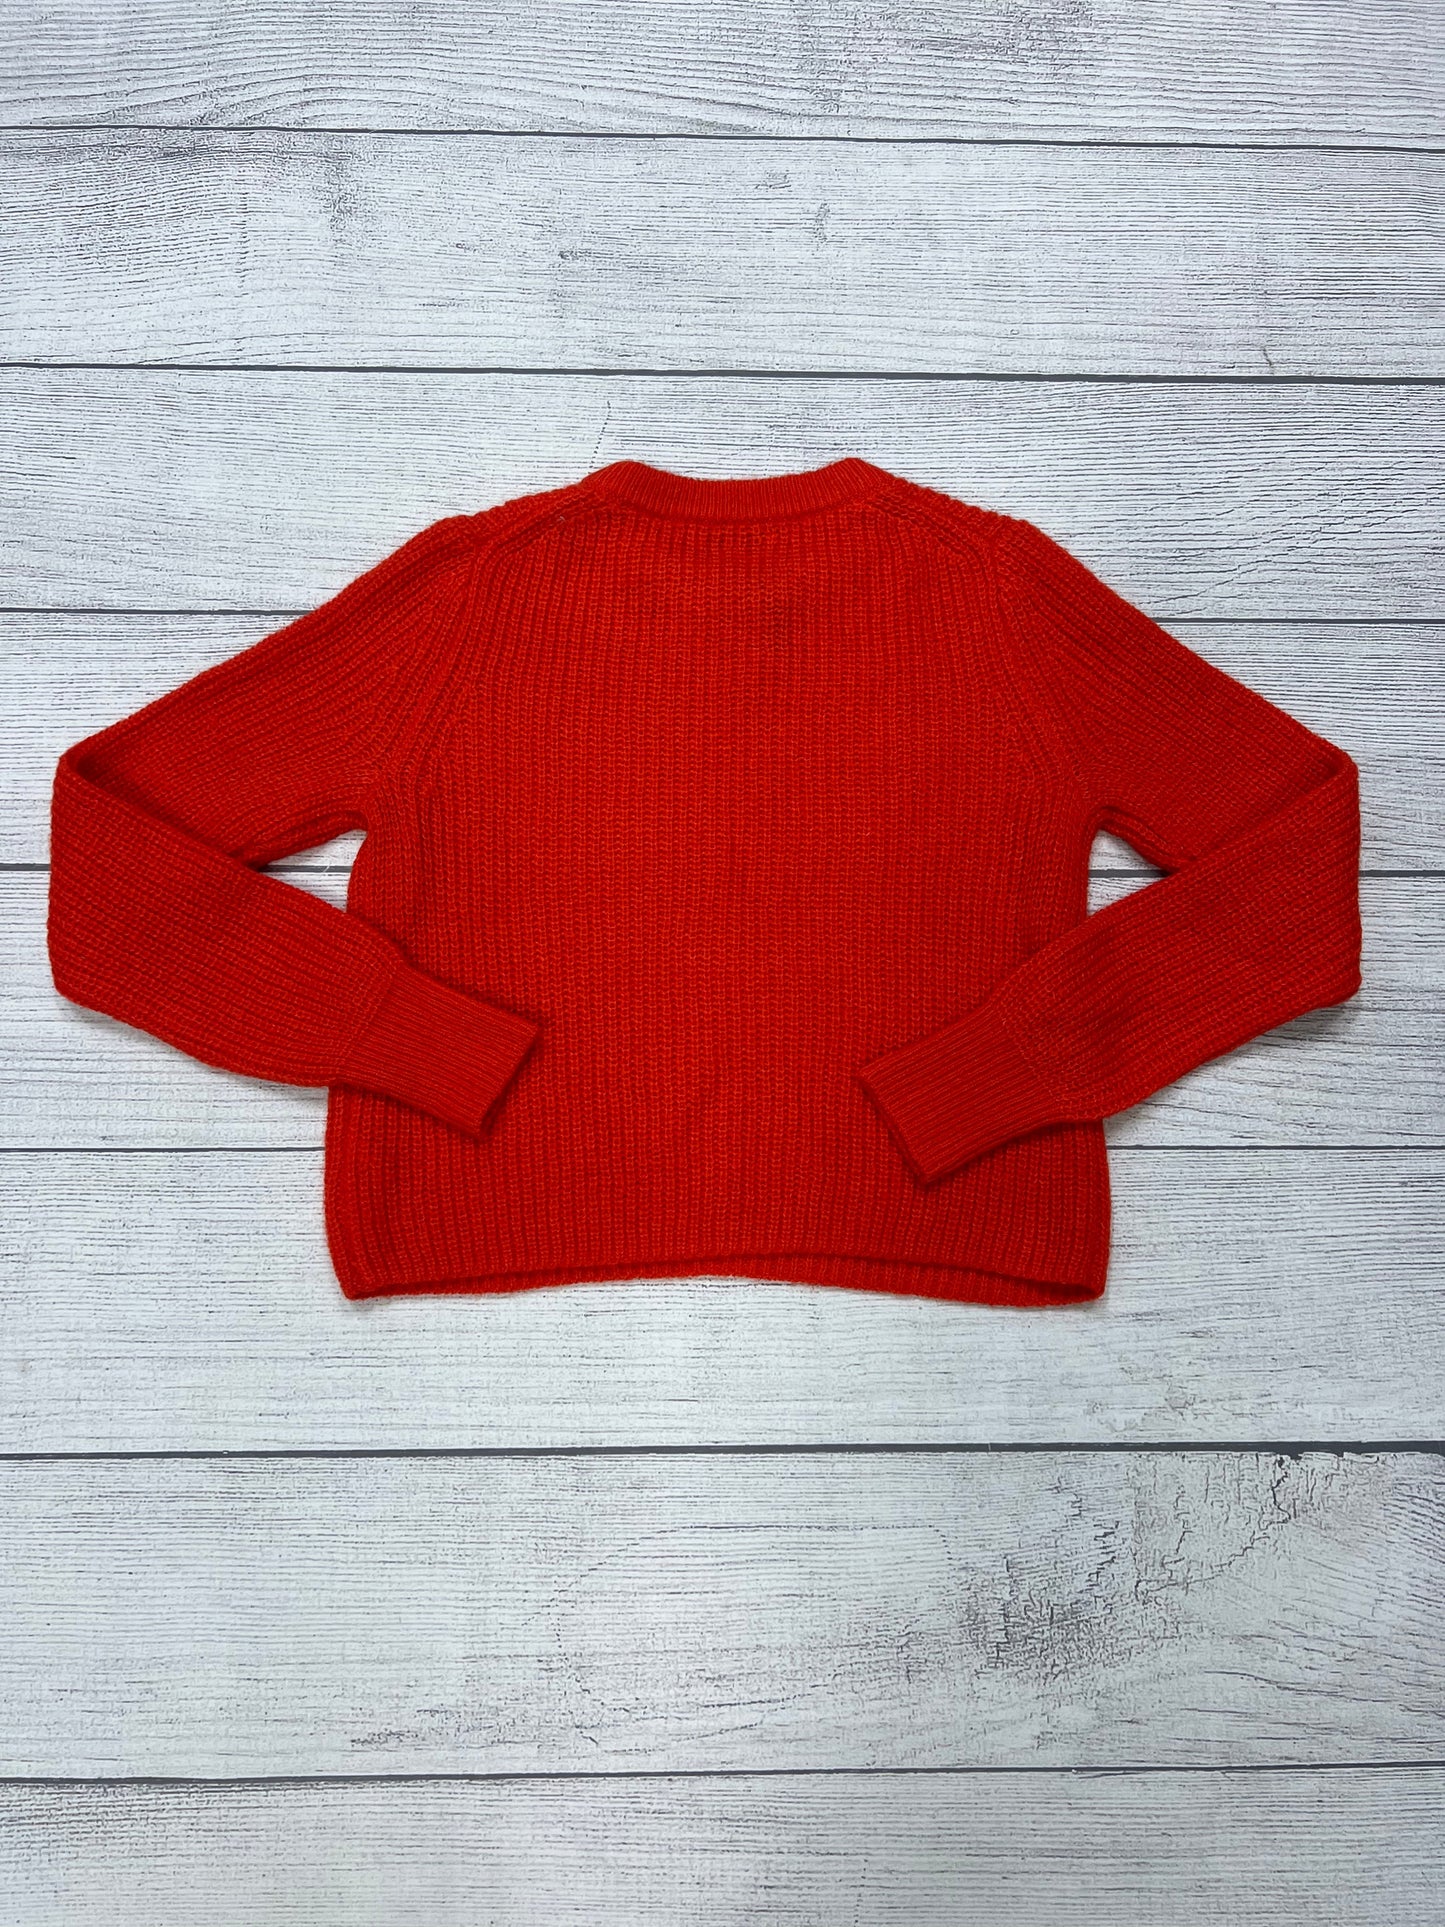 Sweater Designer By Rebecca Minkoff  Size: S